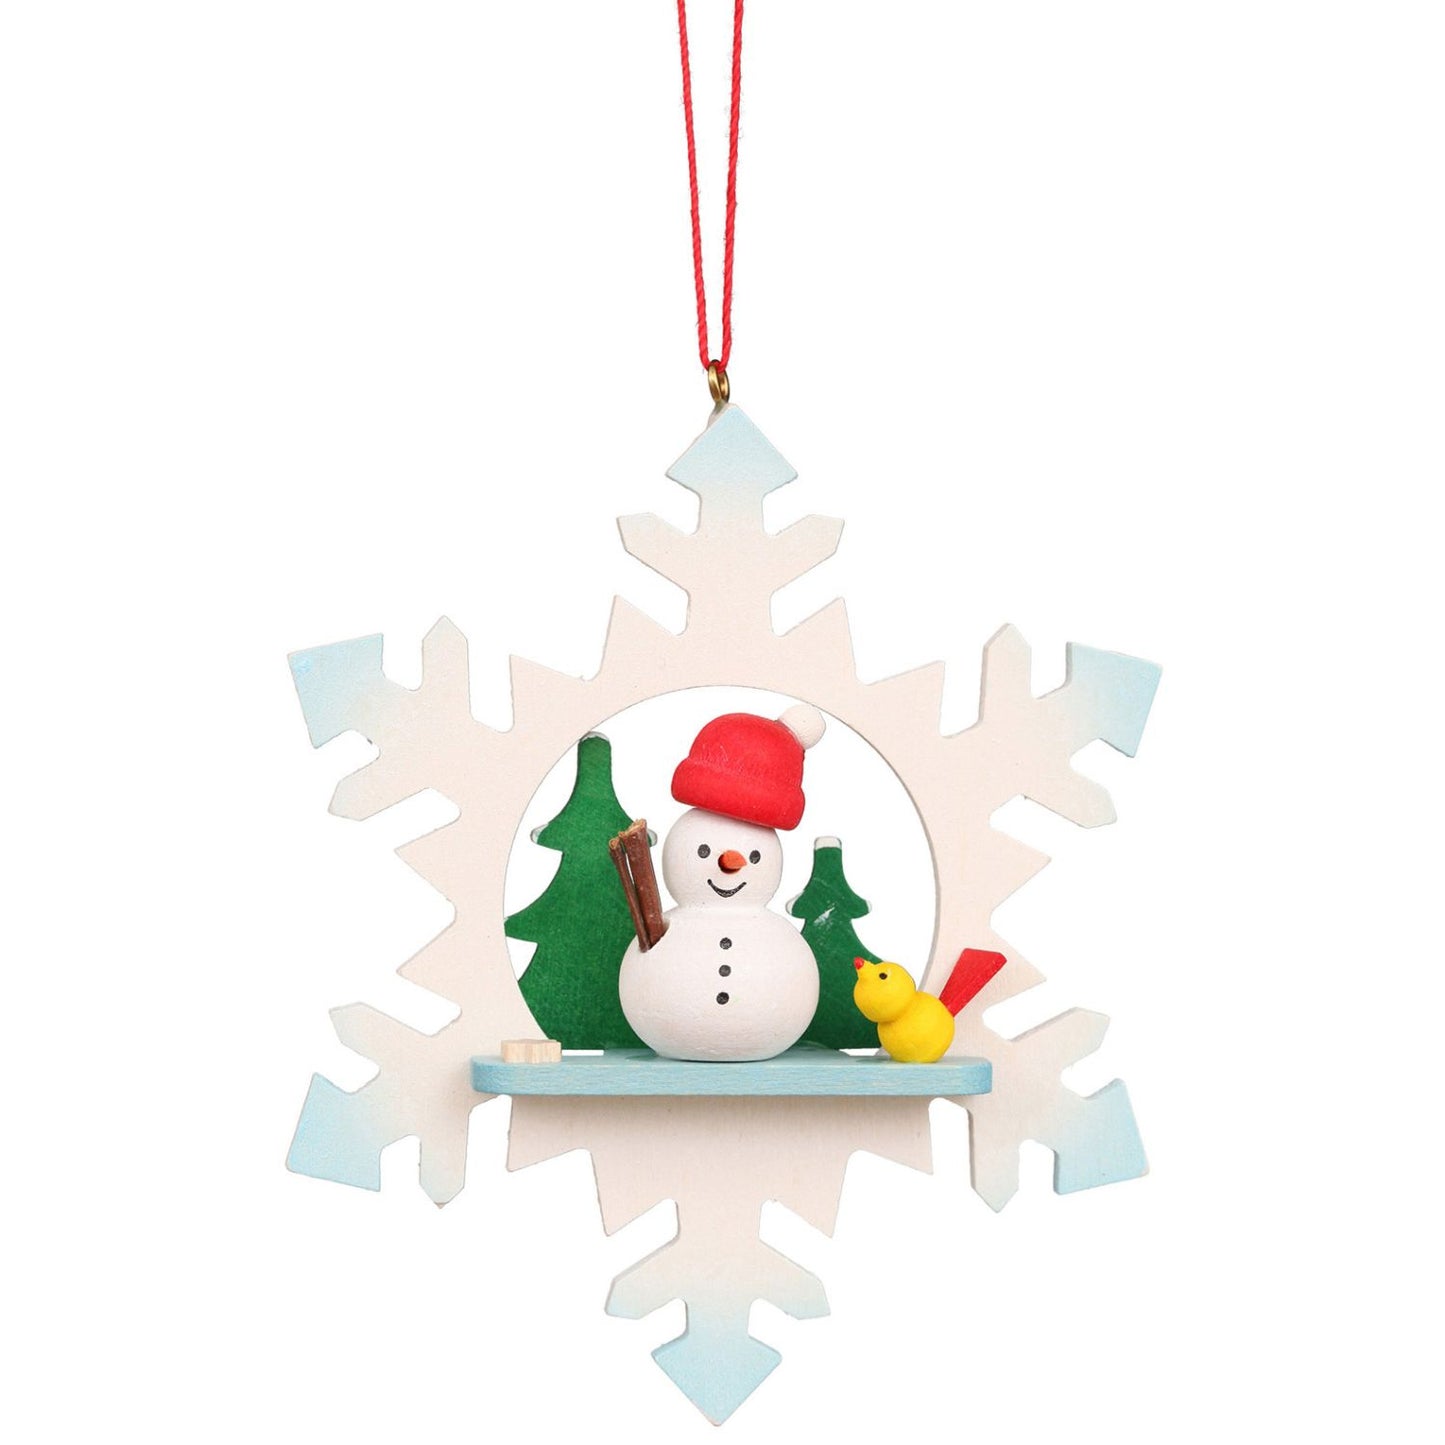 Alexander Taron Christian Ulbricht Ornament - Snowflake with Snowman